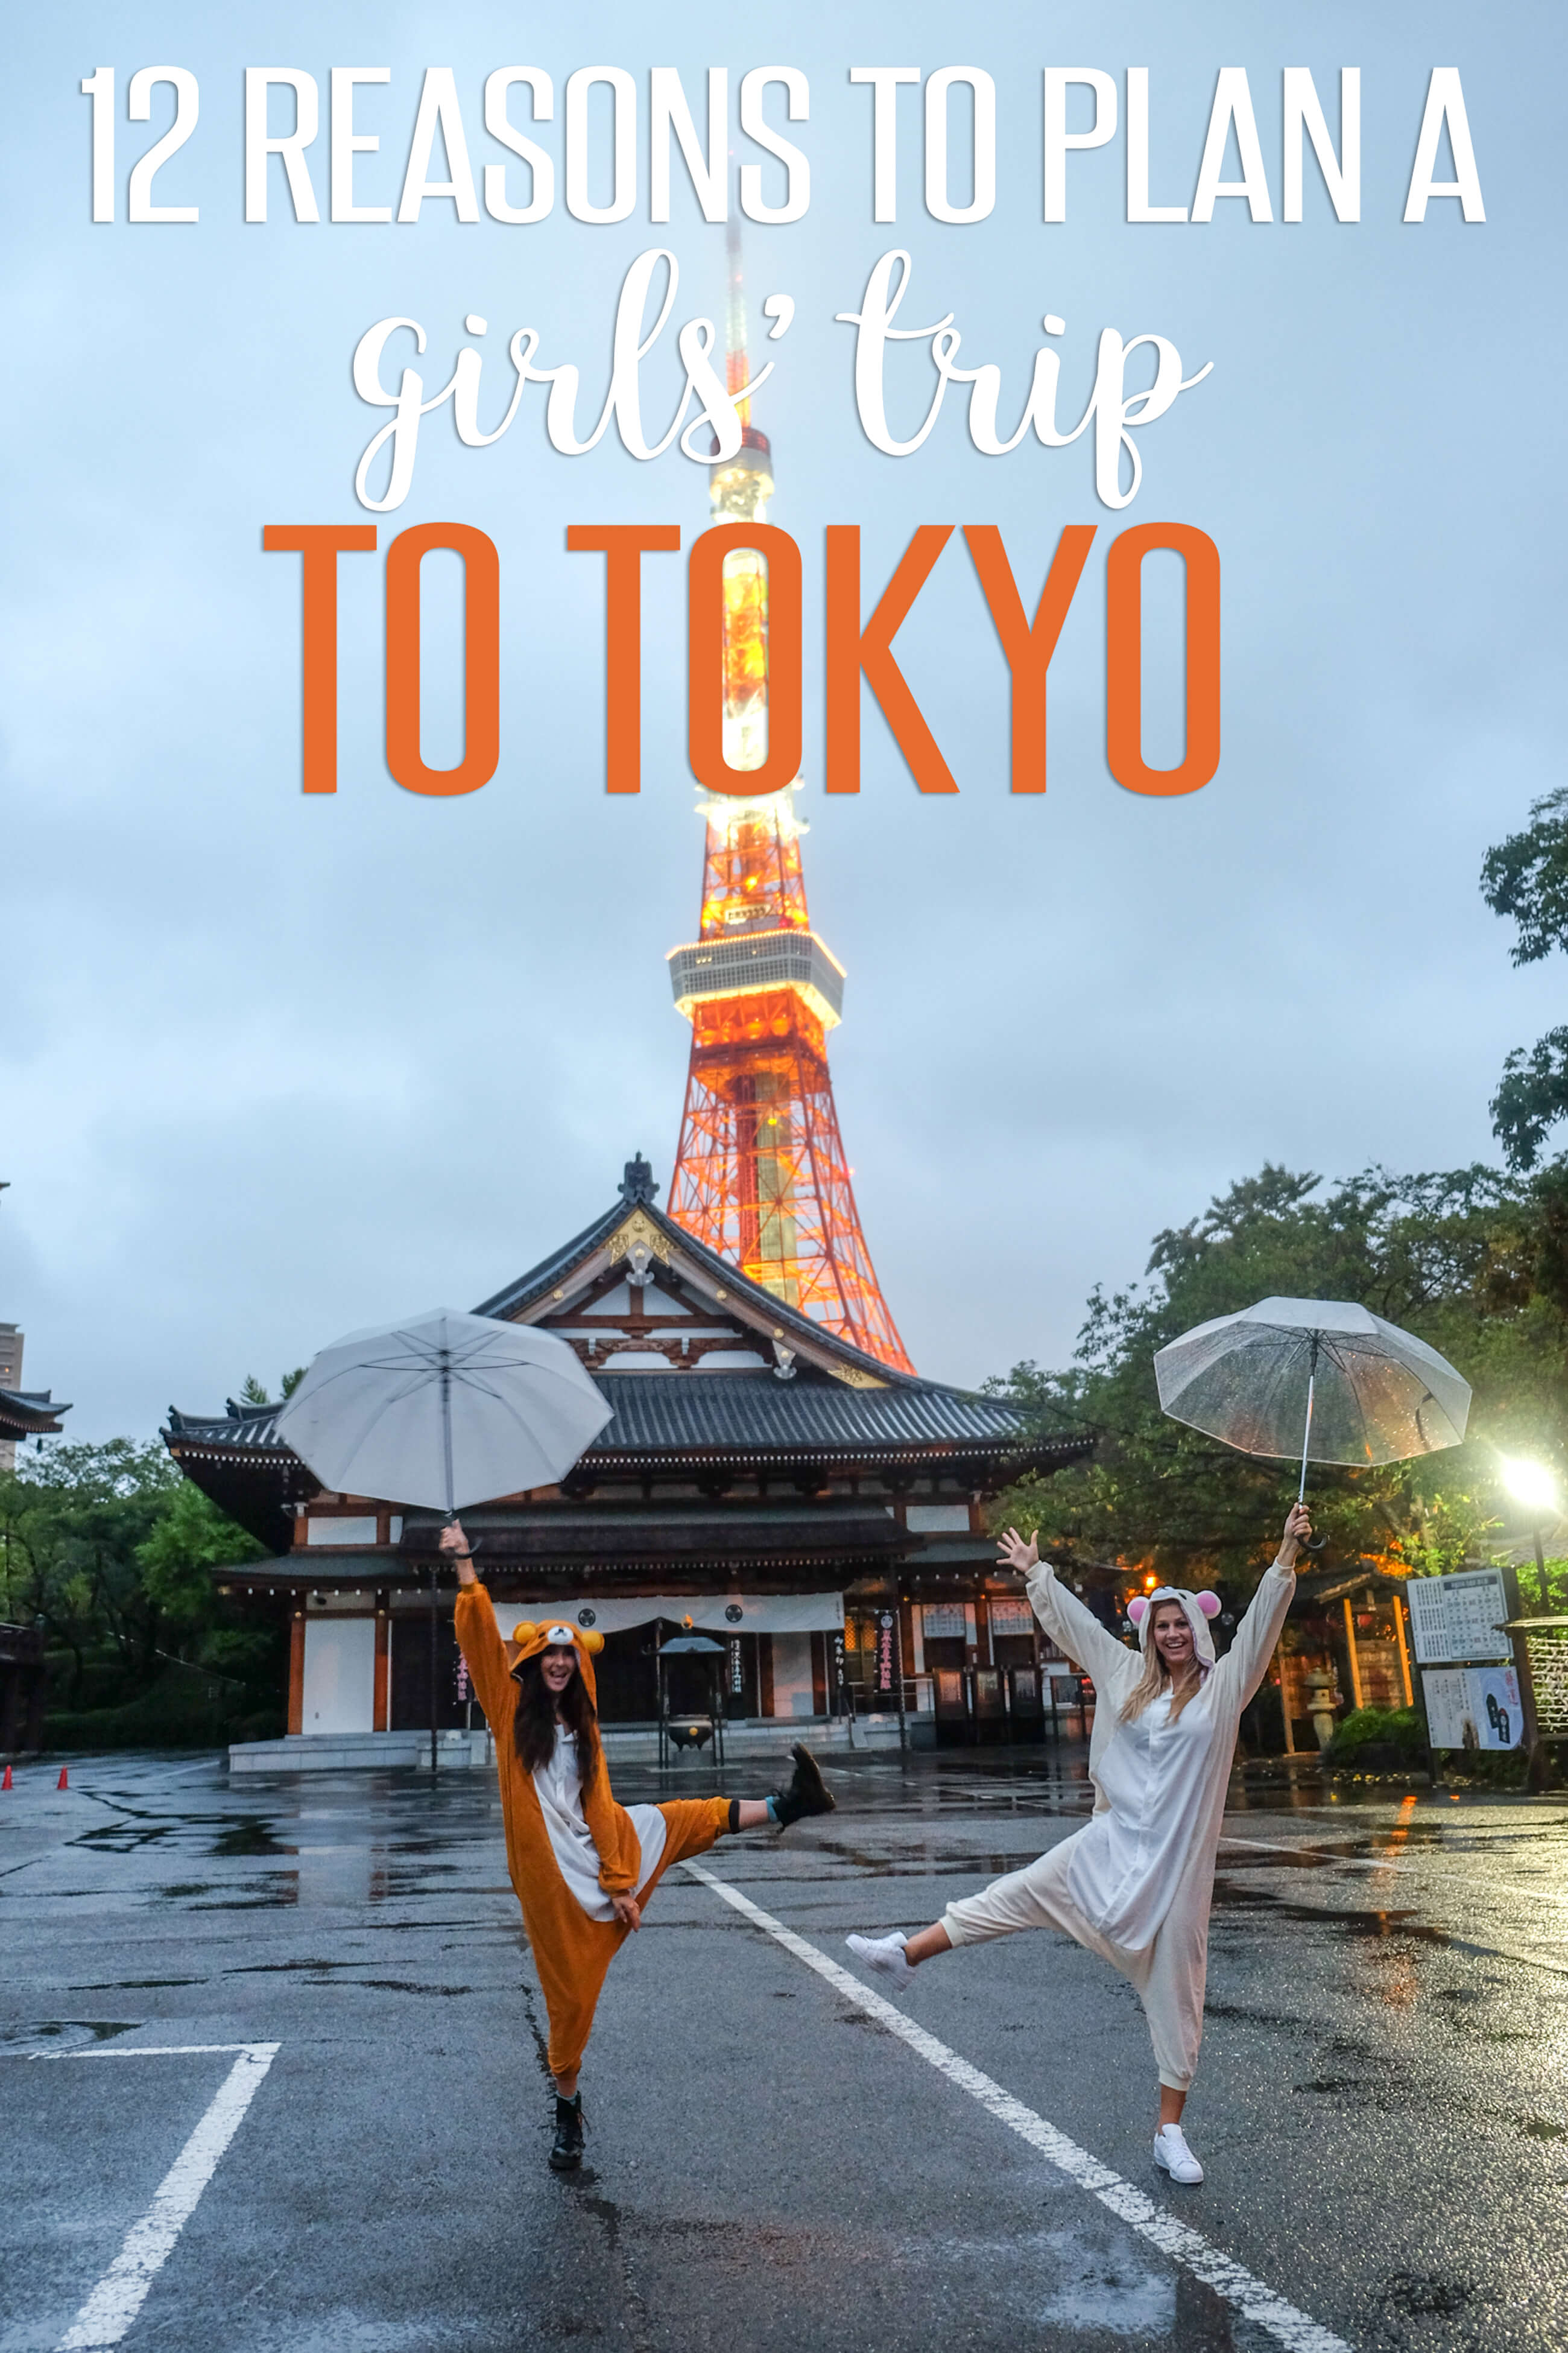 12 Reasons to Plan a Girls’ Trip to Tokyo